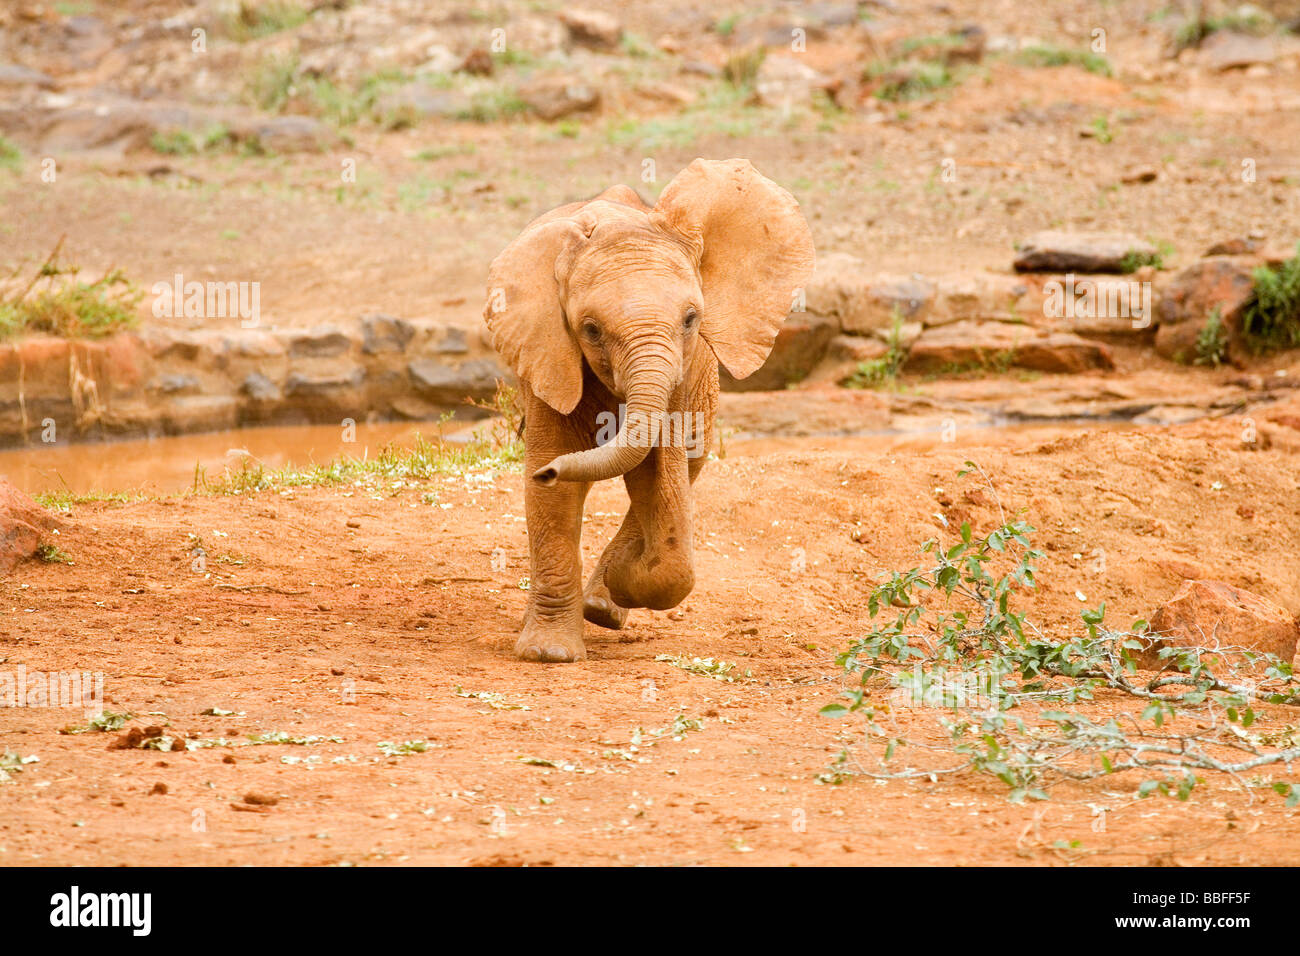 Young orphan baby elephant at David Sheldrick Wildlife Trust sanctuary in Nairobi Kenya East Africa Stock Photo